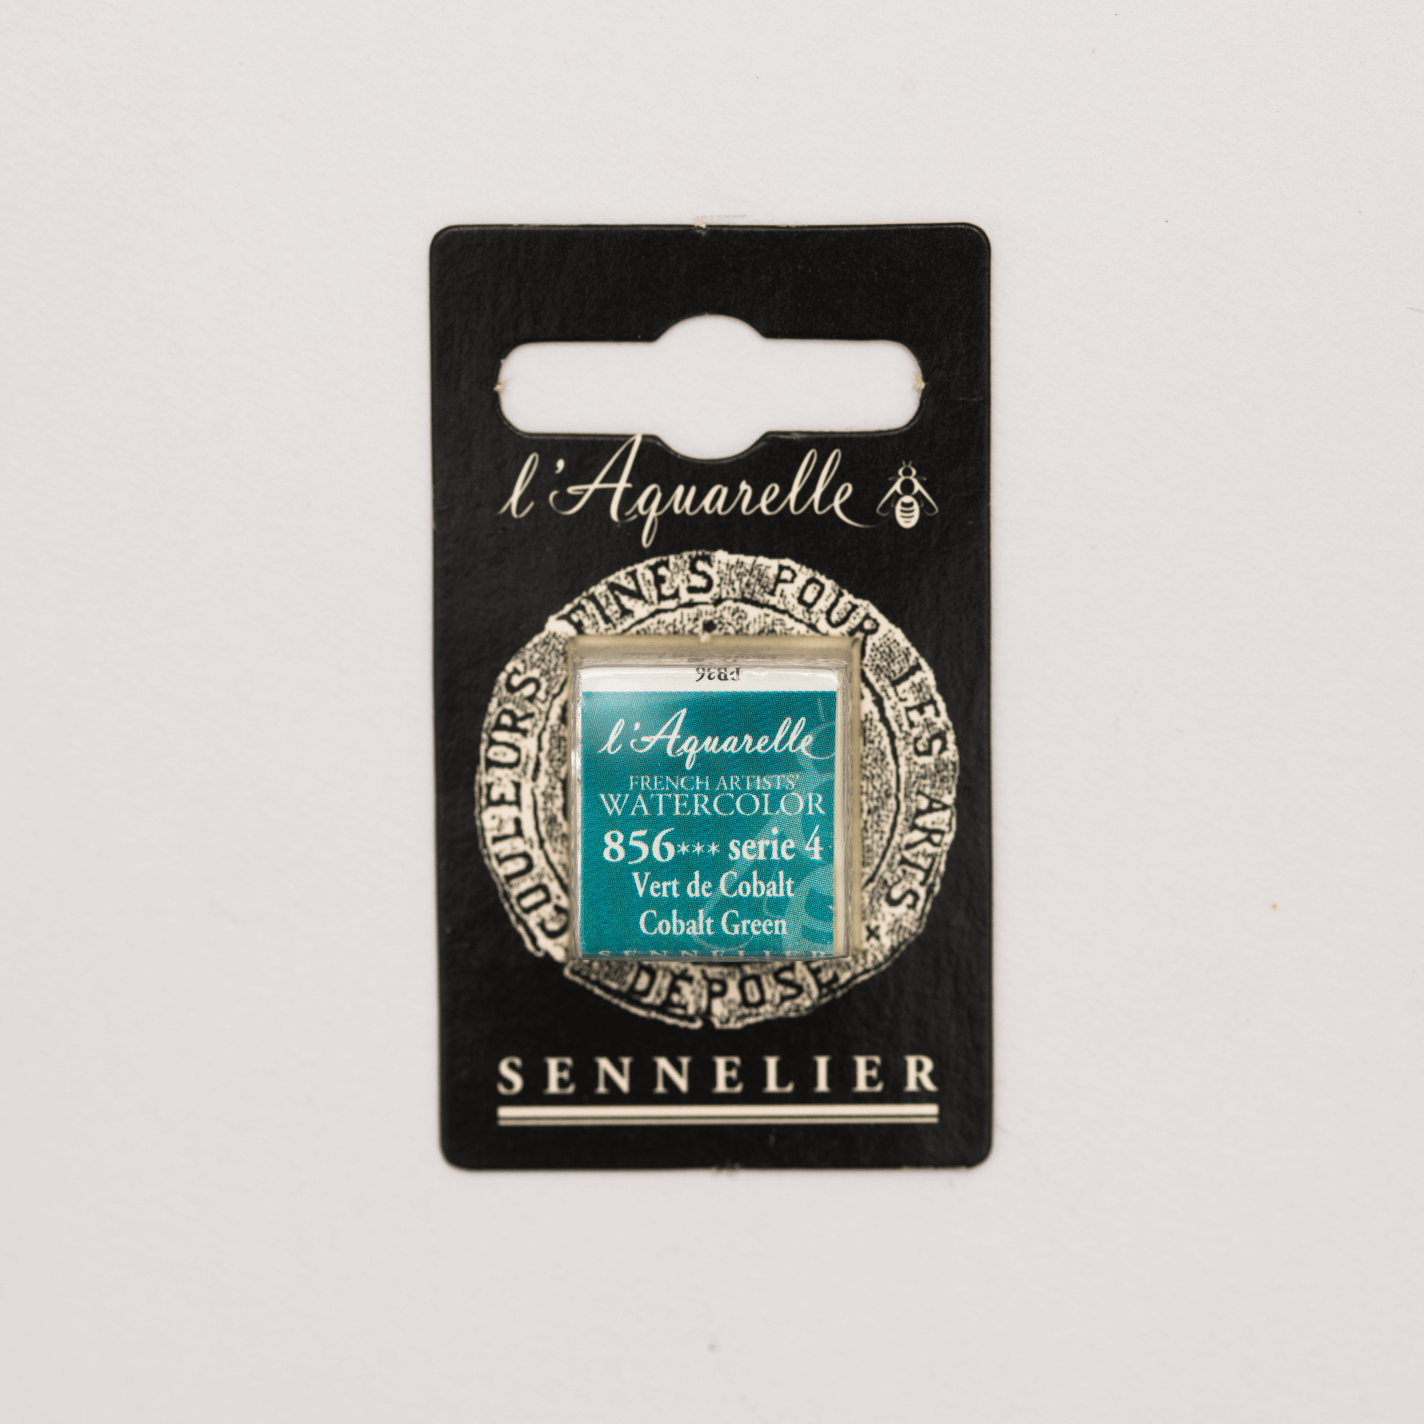 Sennelier Aquarelle pans 1/2 pan Cobalt Green